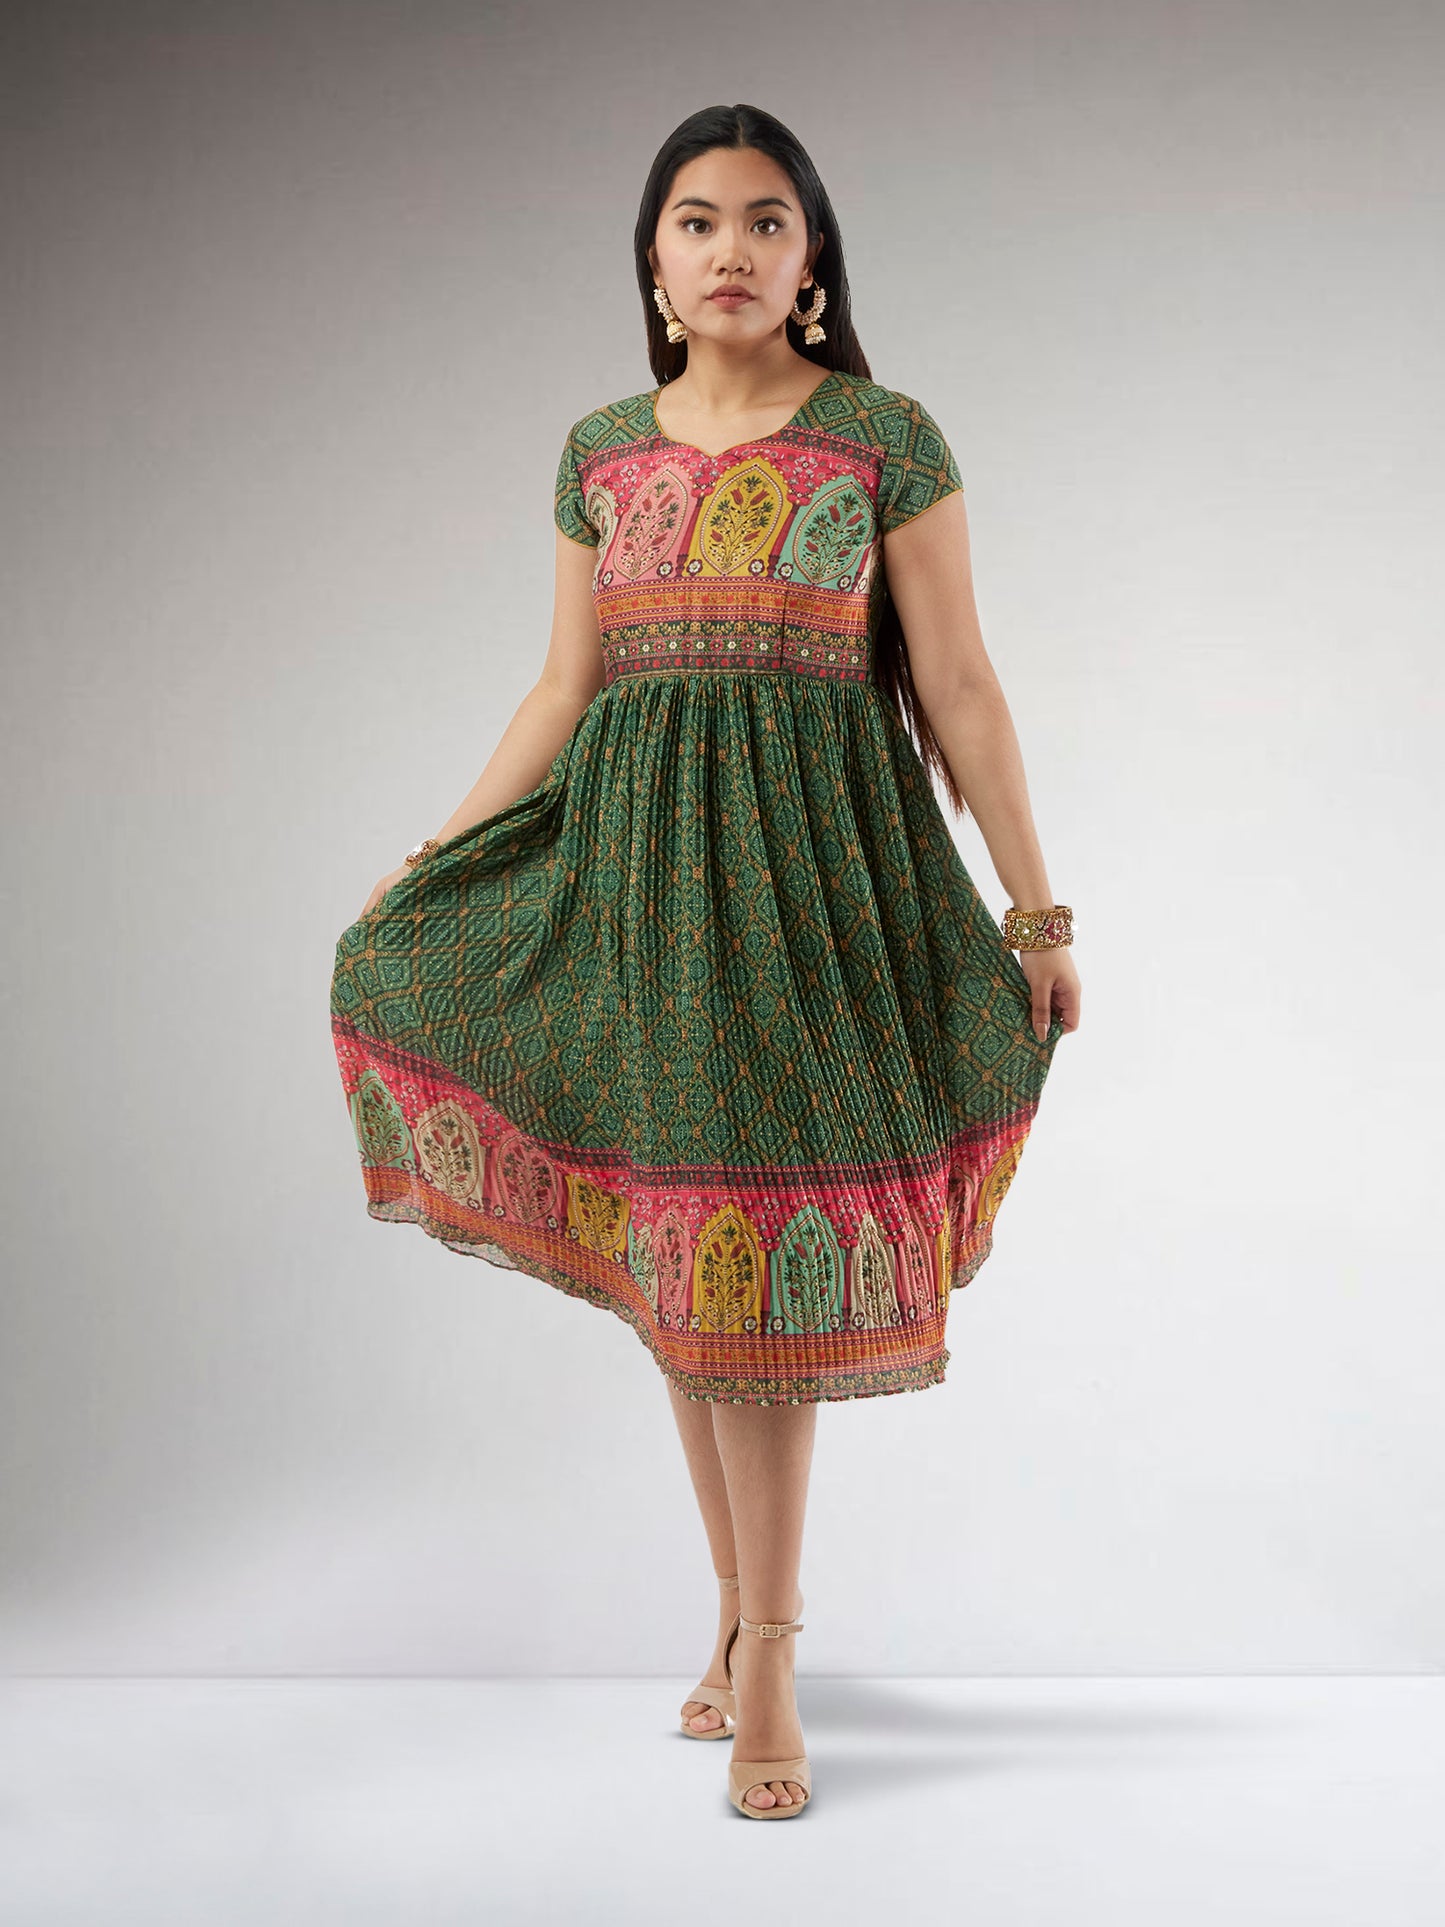 Harmony Hues - Dark Green Crushed Knee Length Dress